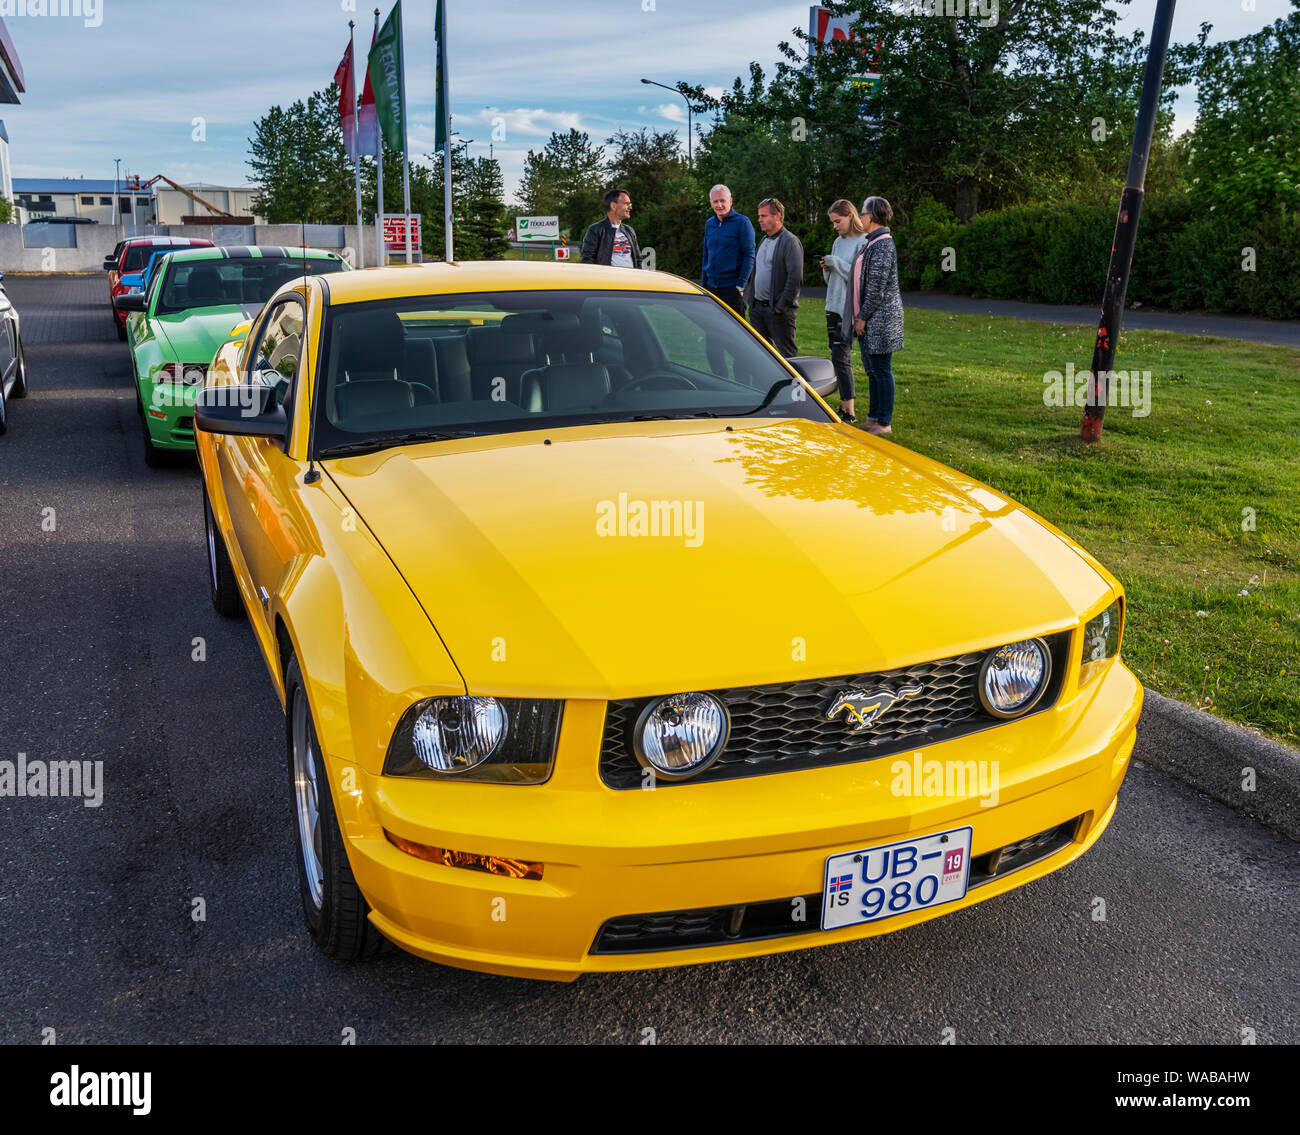 Mustang on display, Independence Day, Reykjavik, Iceland Stock Photo